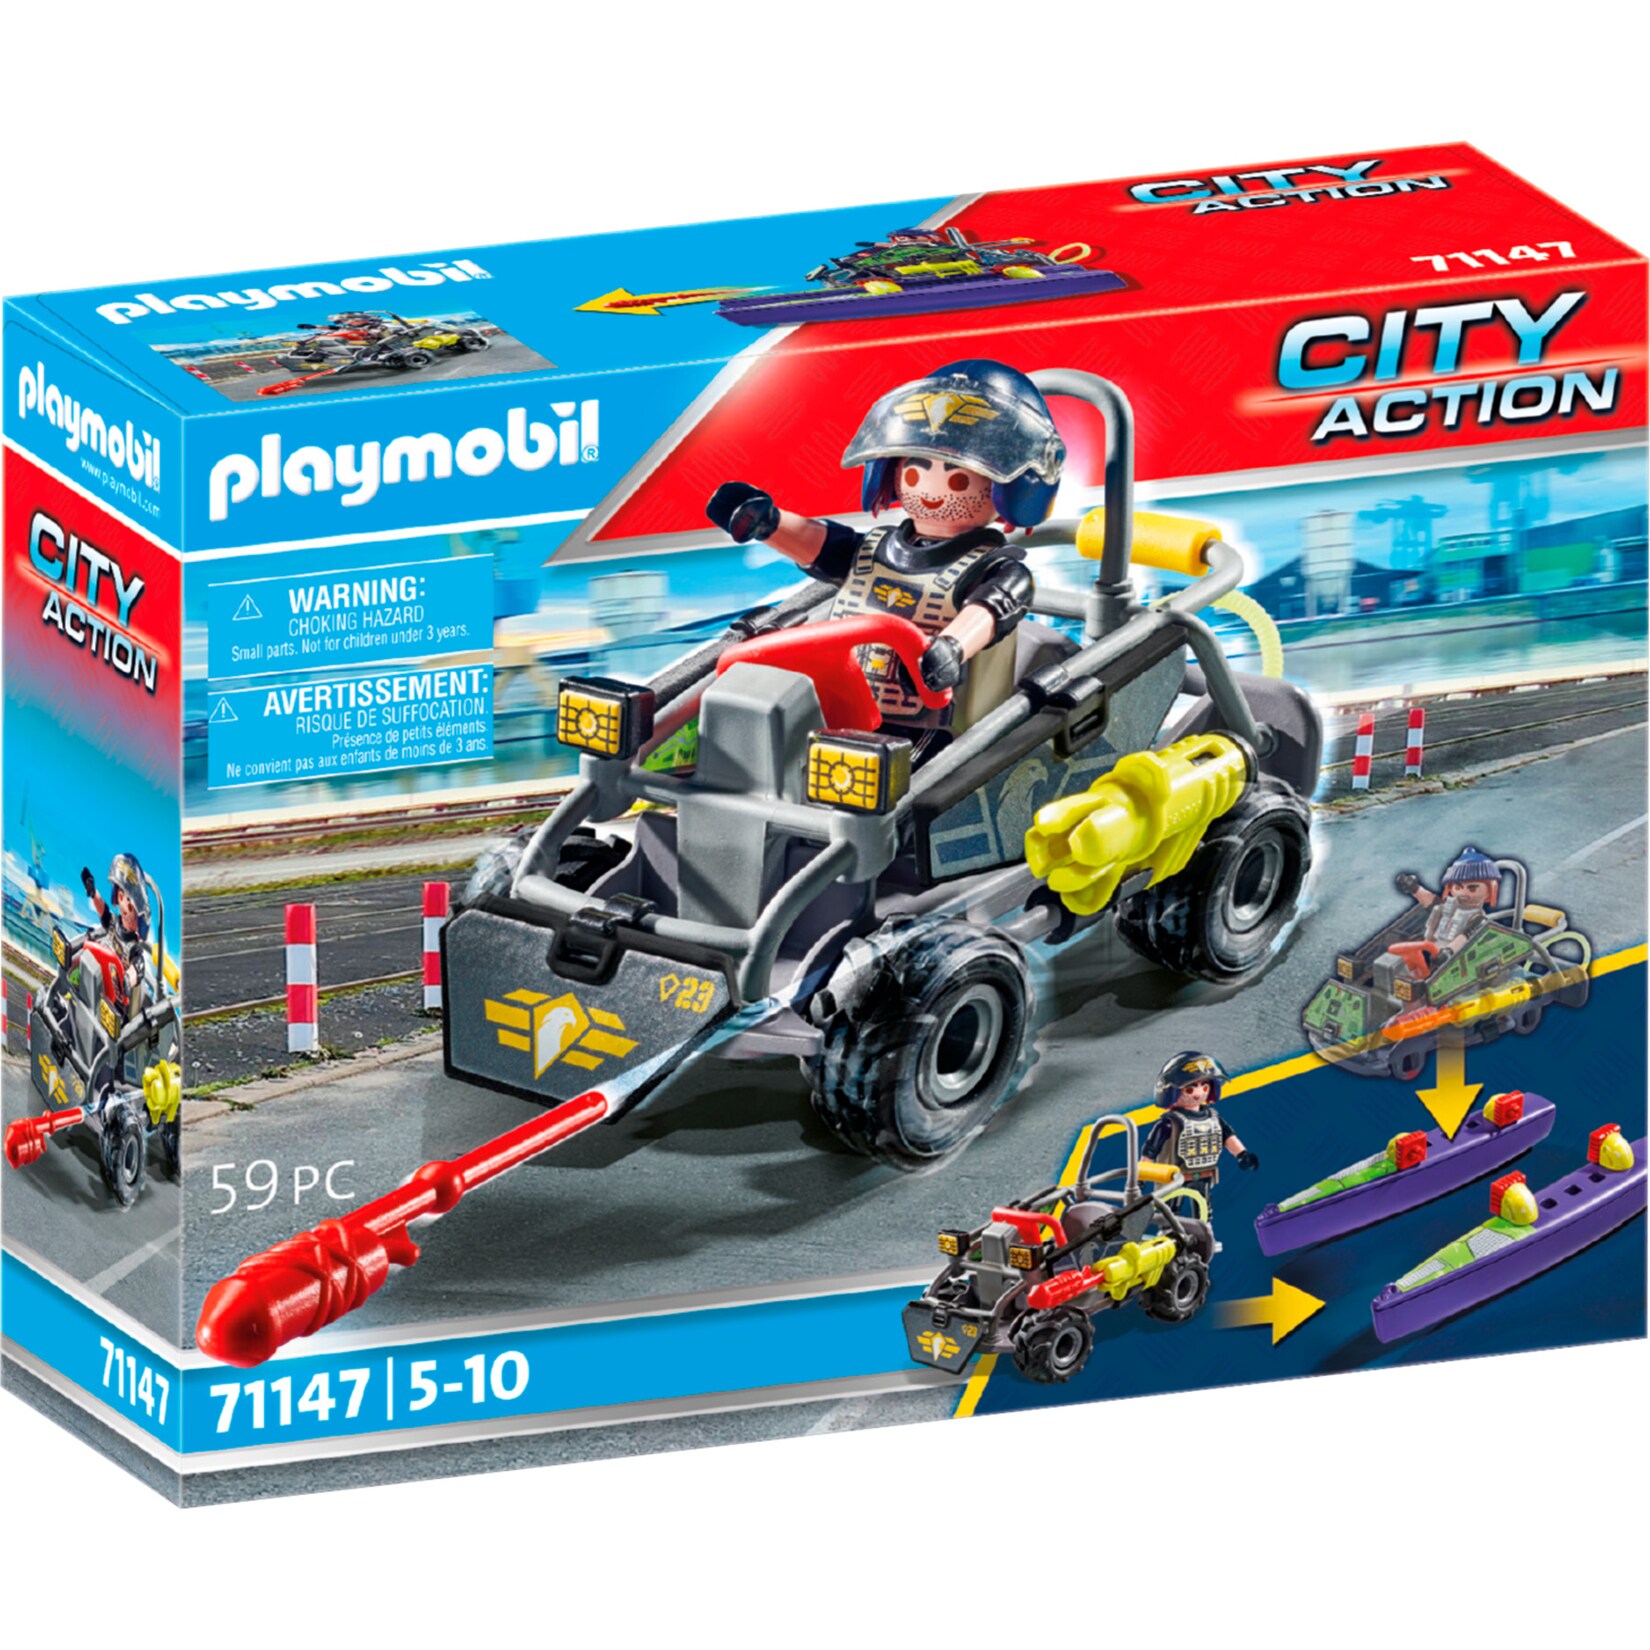 PLAYMOBIL Konstruktionsspielzeug City Action SWAT-Multi-Terrain-Quad